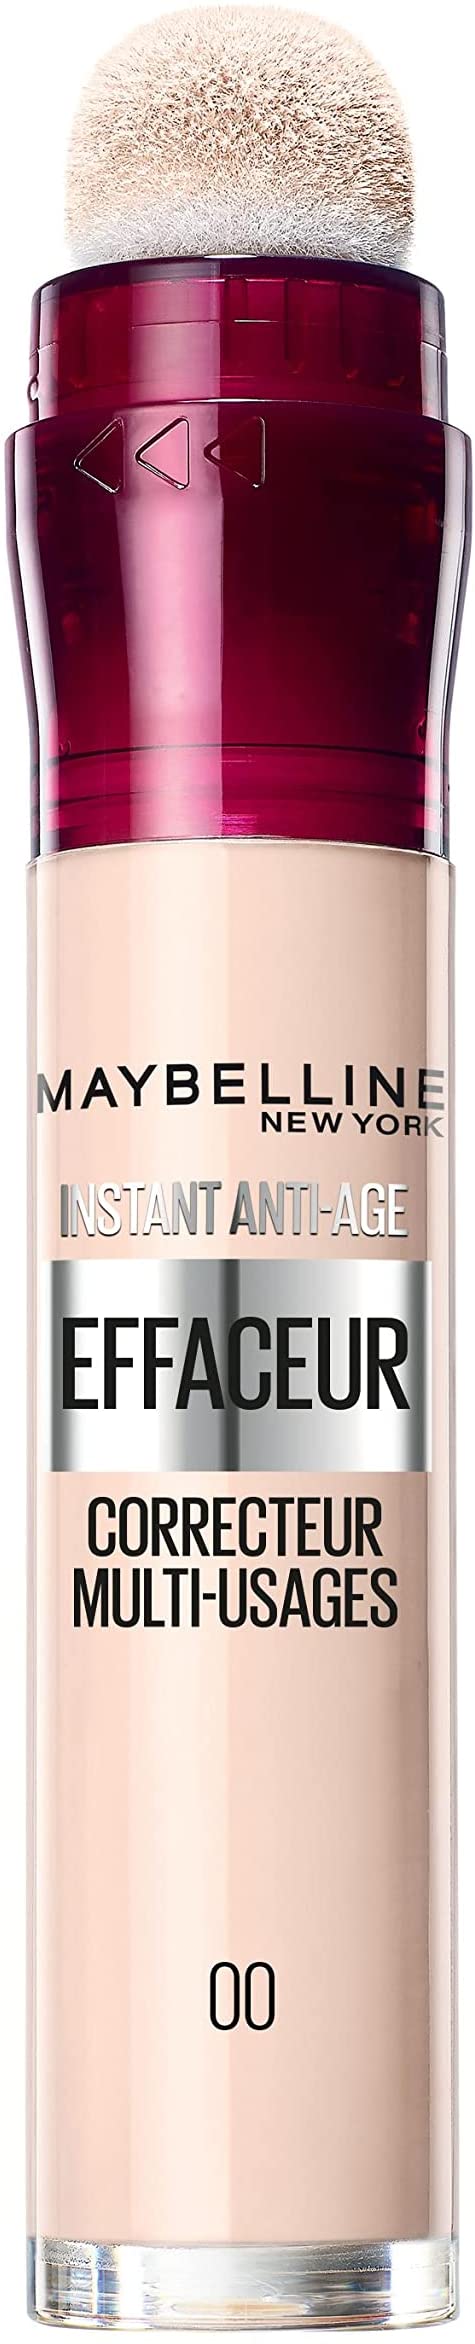 Maybelline New York - Anti-cernes promotion 7,99 euros